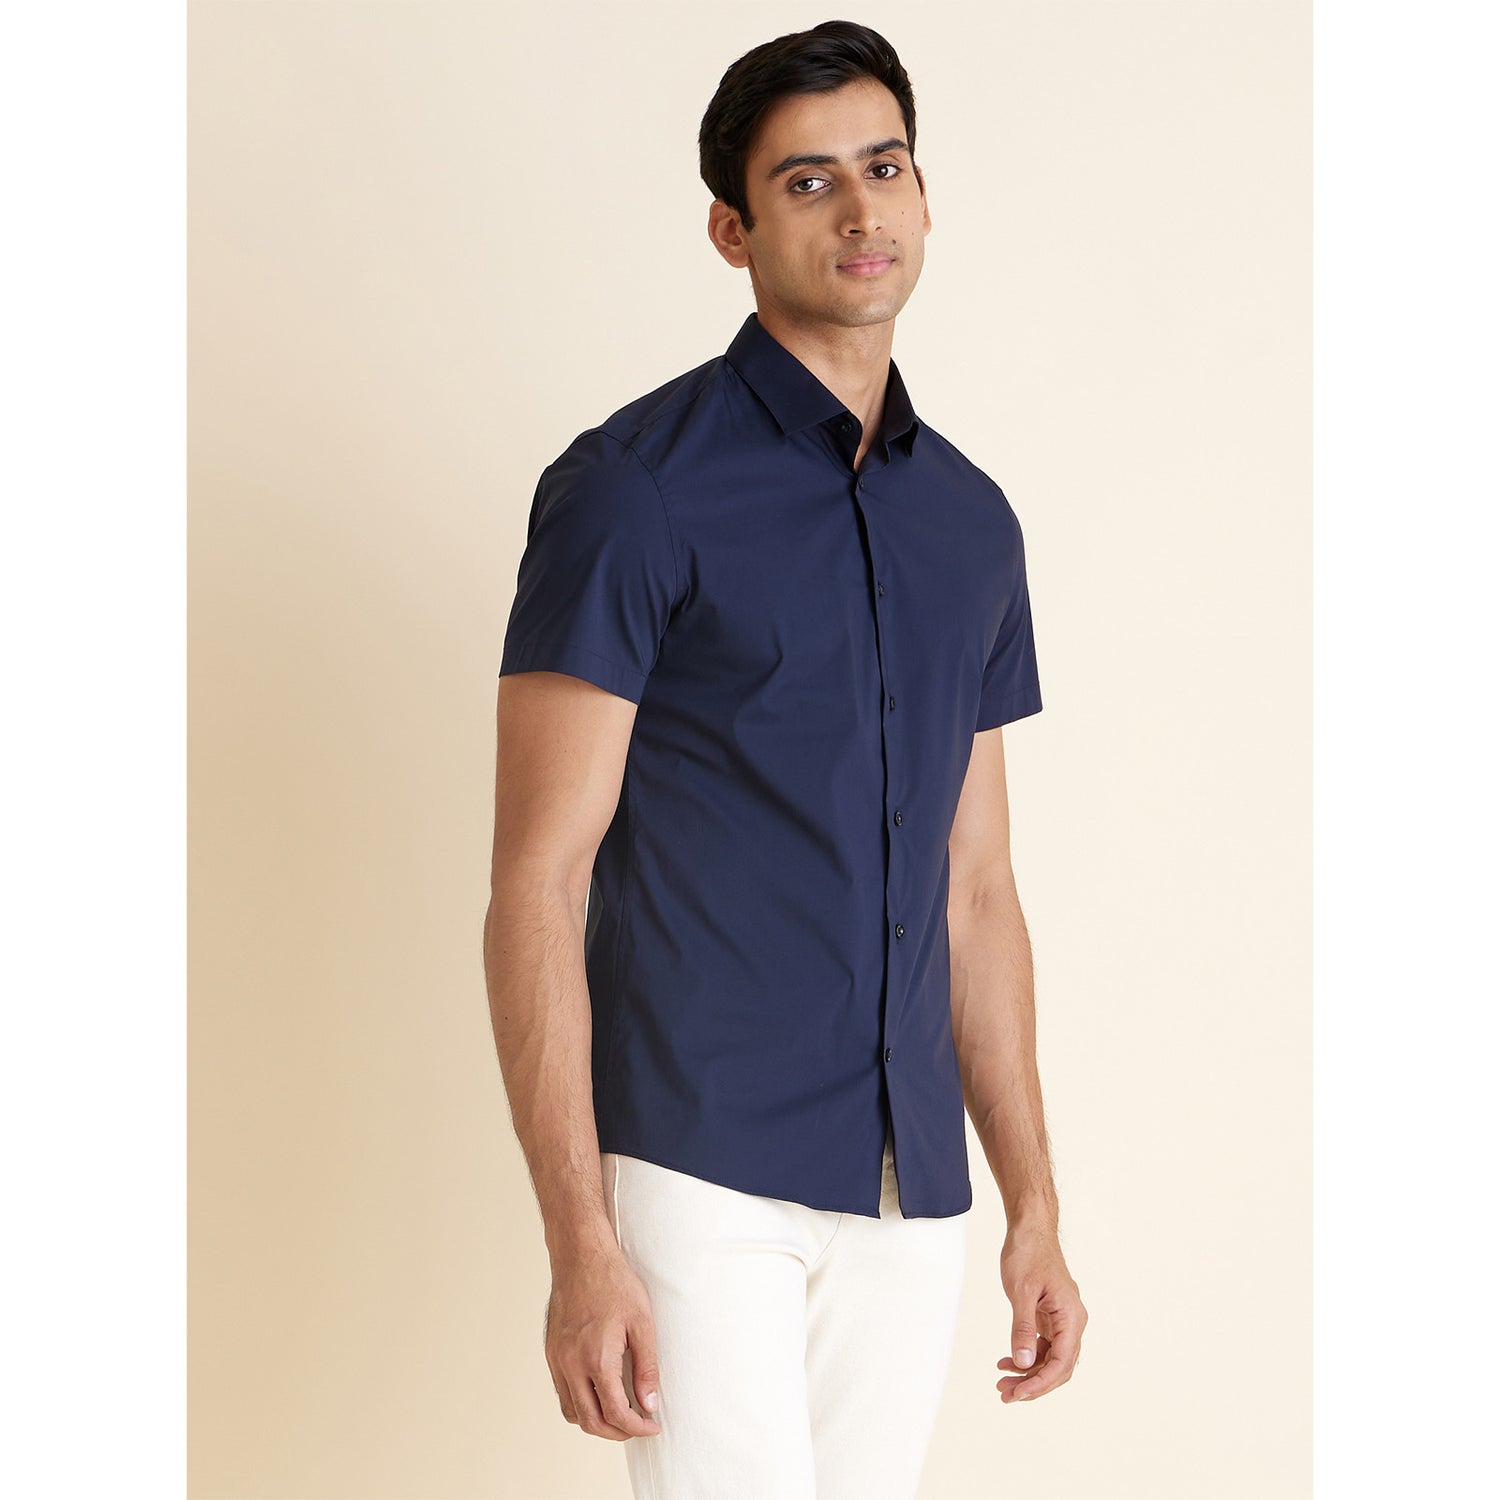 Navy Blue Classic Casual Cotton Shirt (DASLIM.)